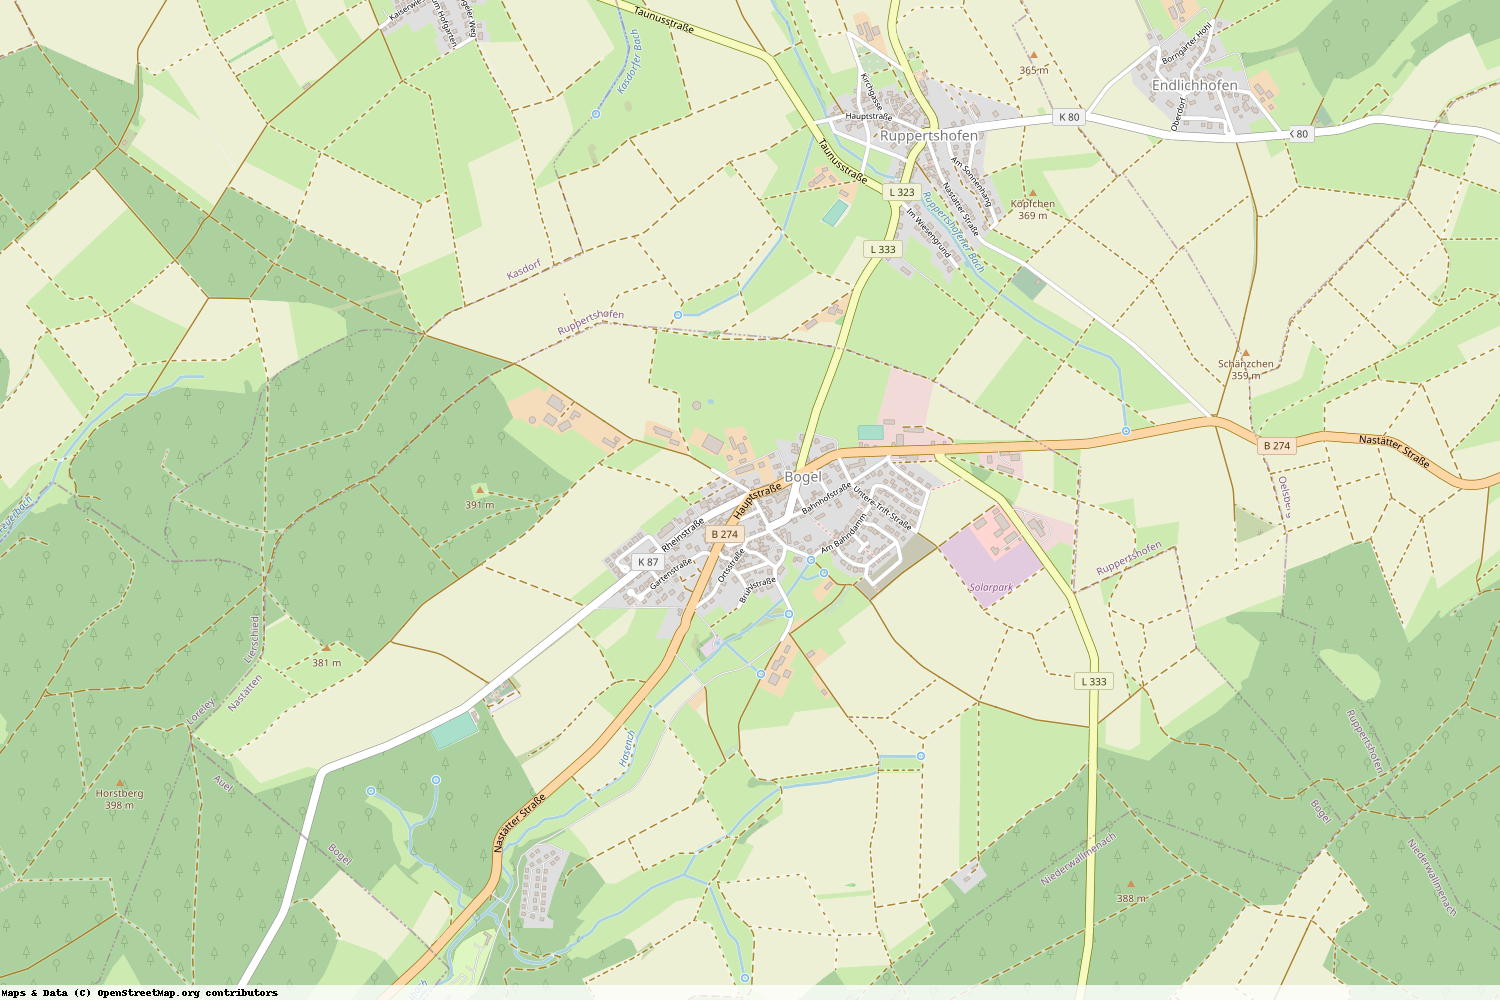 Ist gerade Stromausfall in Rheinland-Pfalz - Rhein-Lahn-Kreis - Bogel?